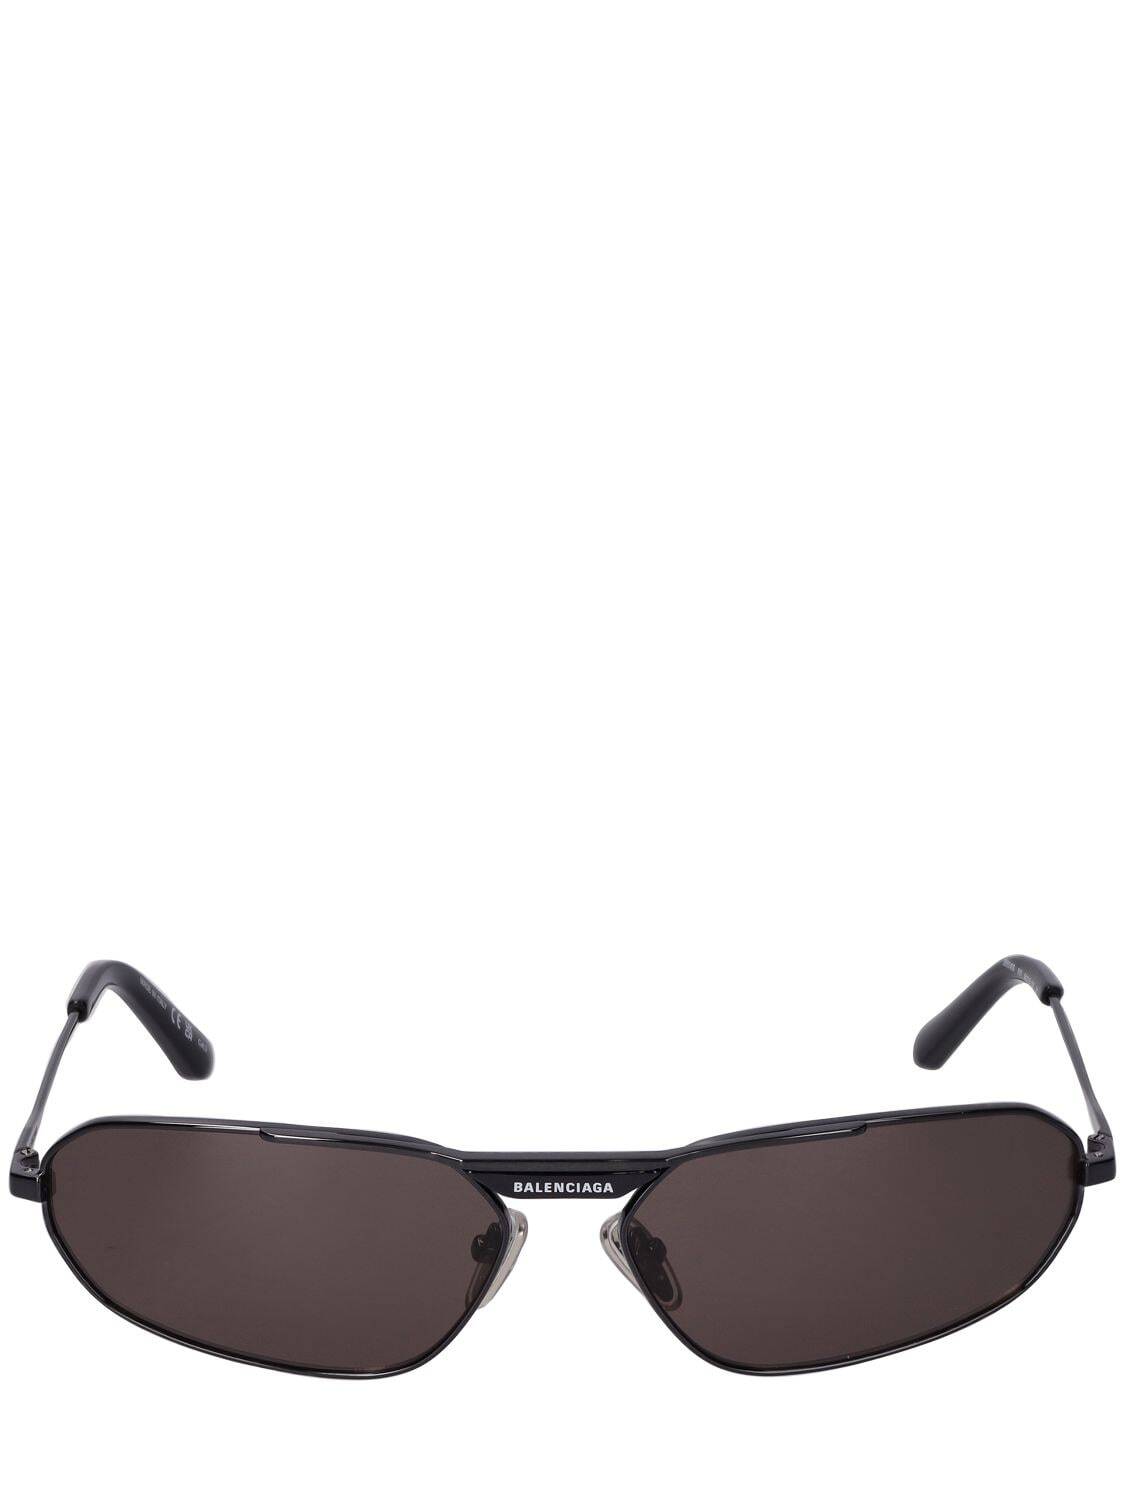 BALENCIAGA 0245s Tag 2.0 Oval Metal Sunglasses in black